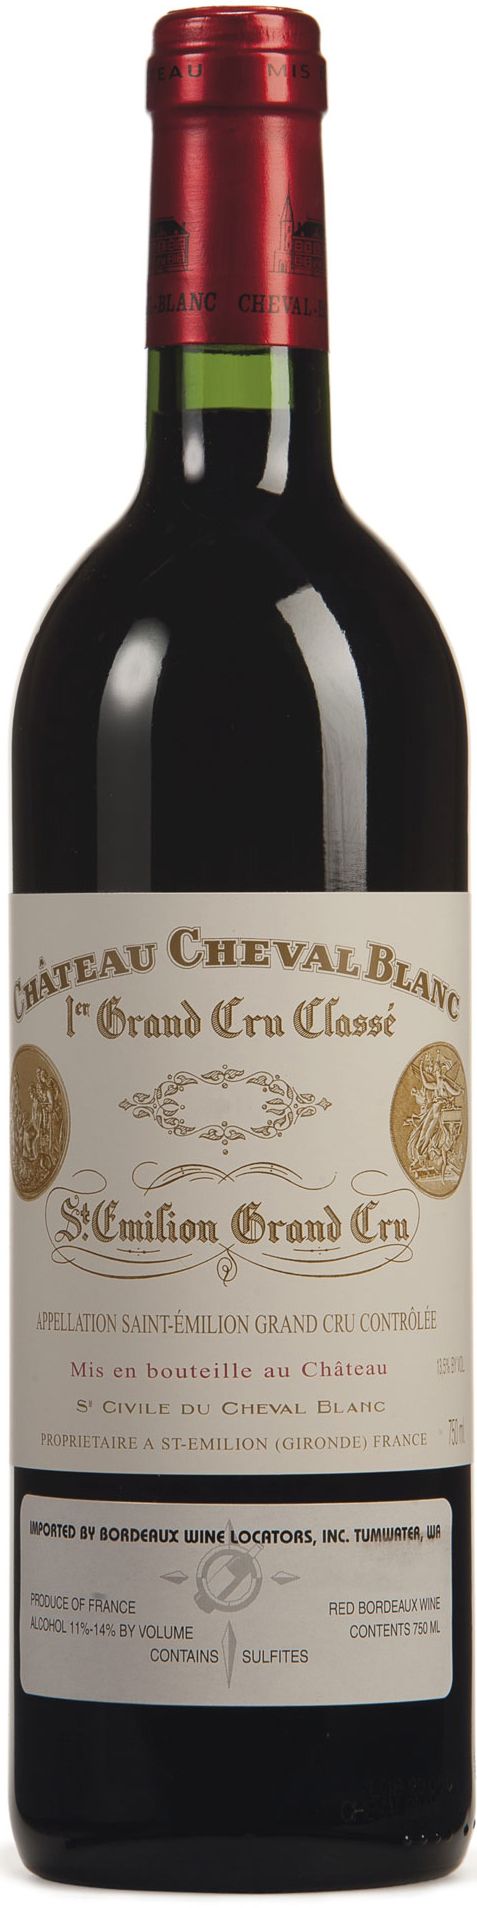 Chateau Cheval Blanc, 1998